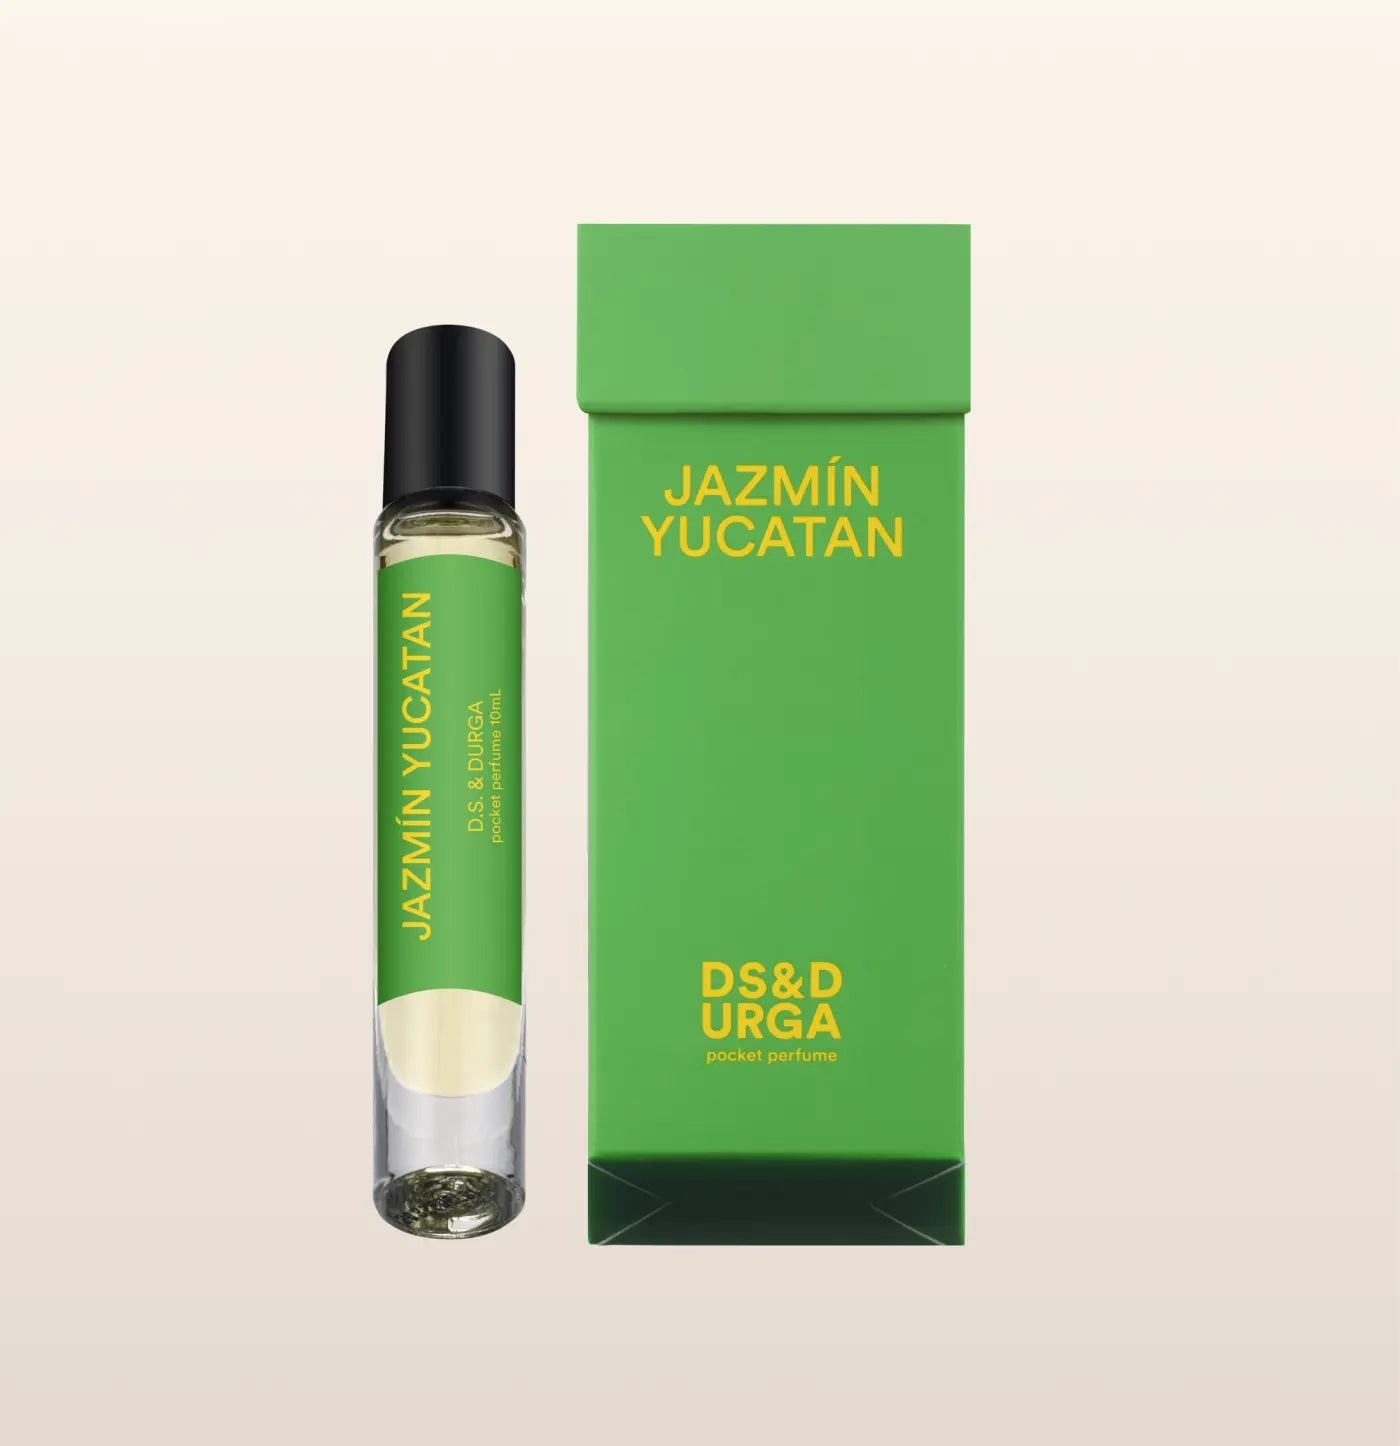 jazmin yucatan pocket perfume